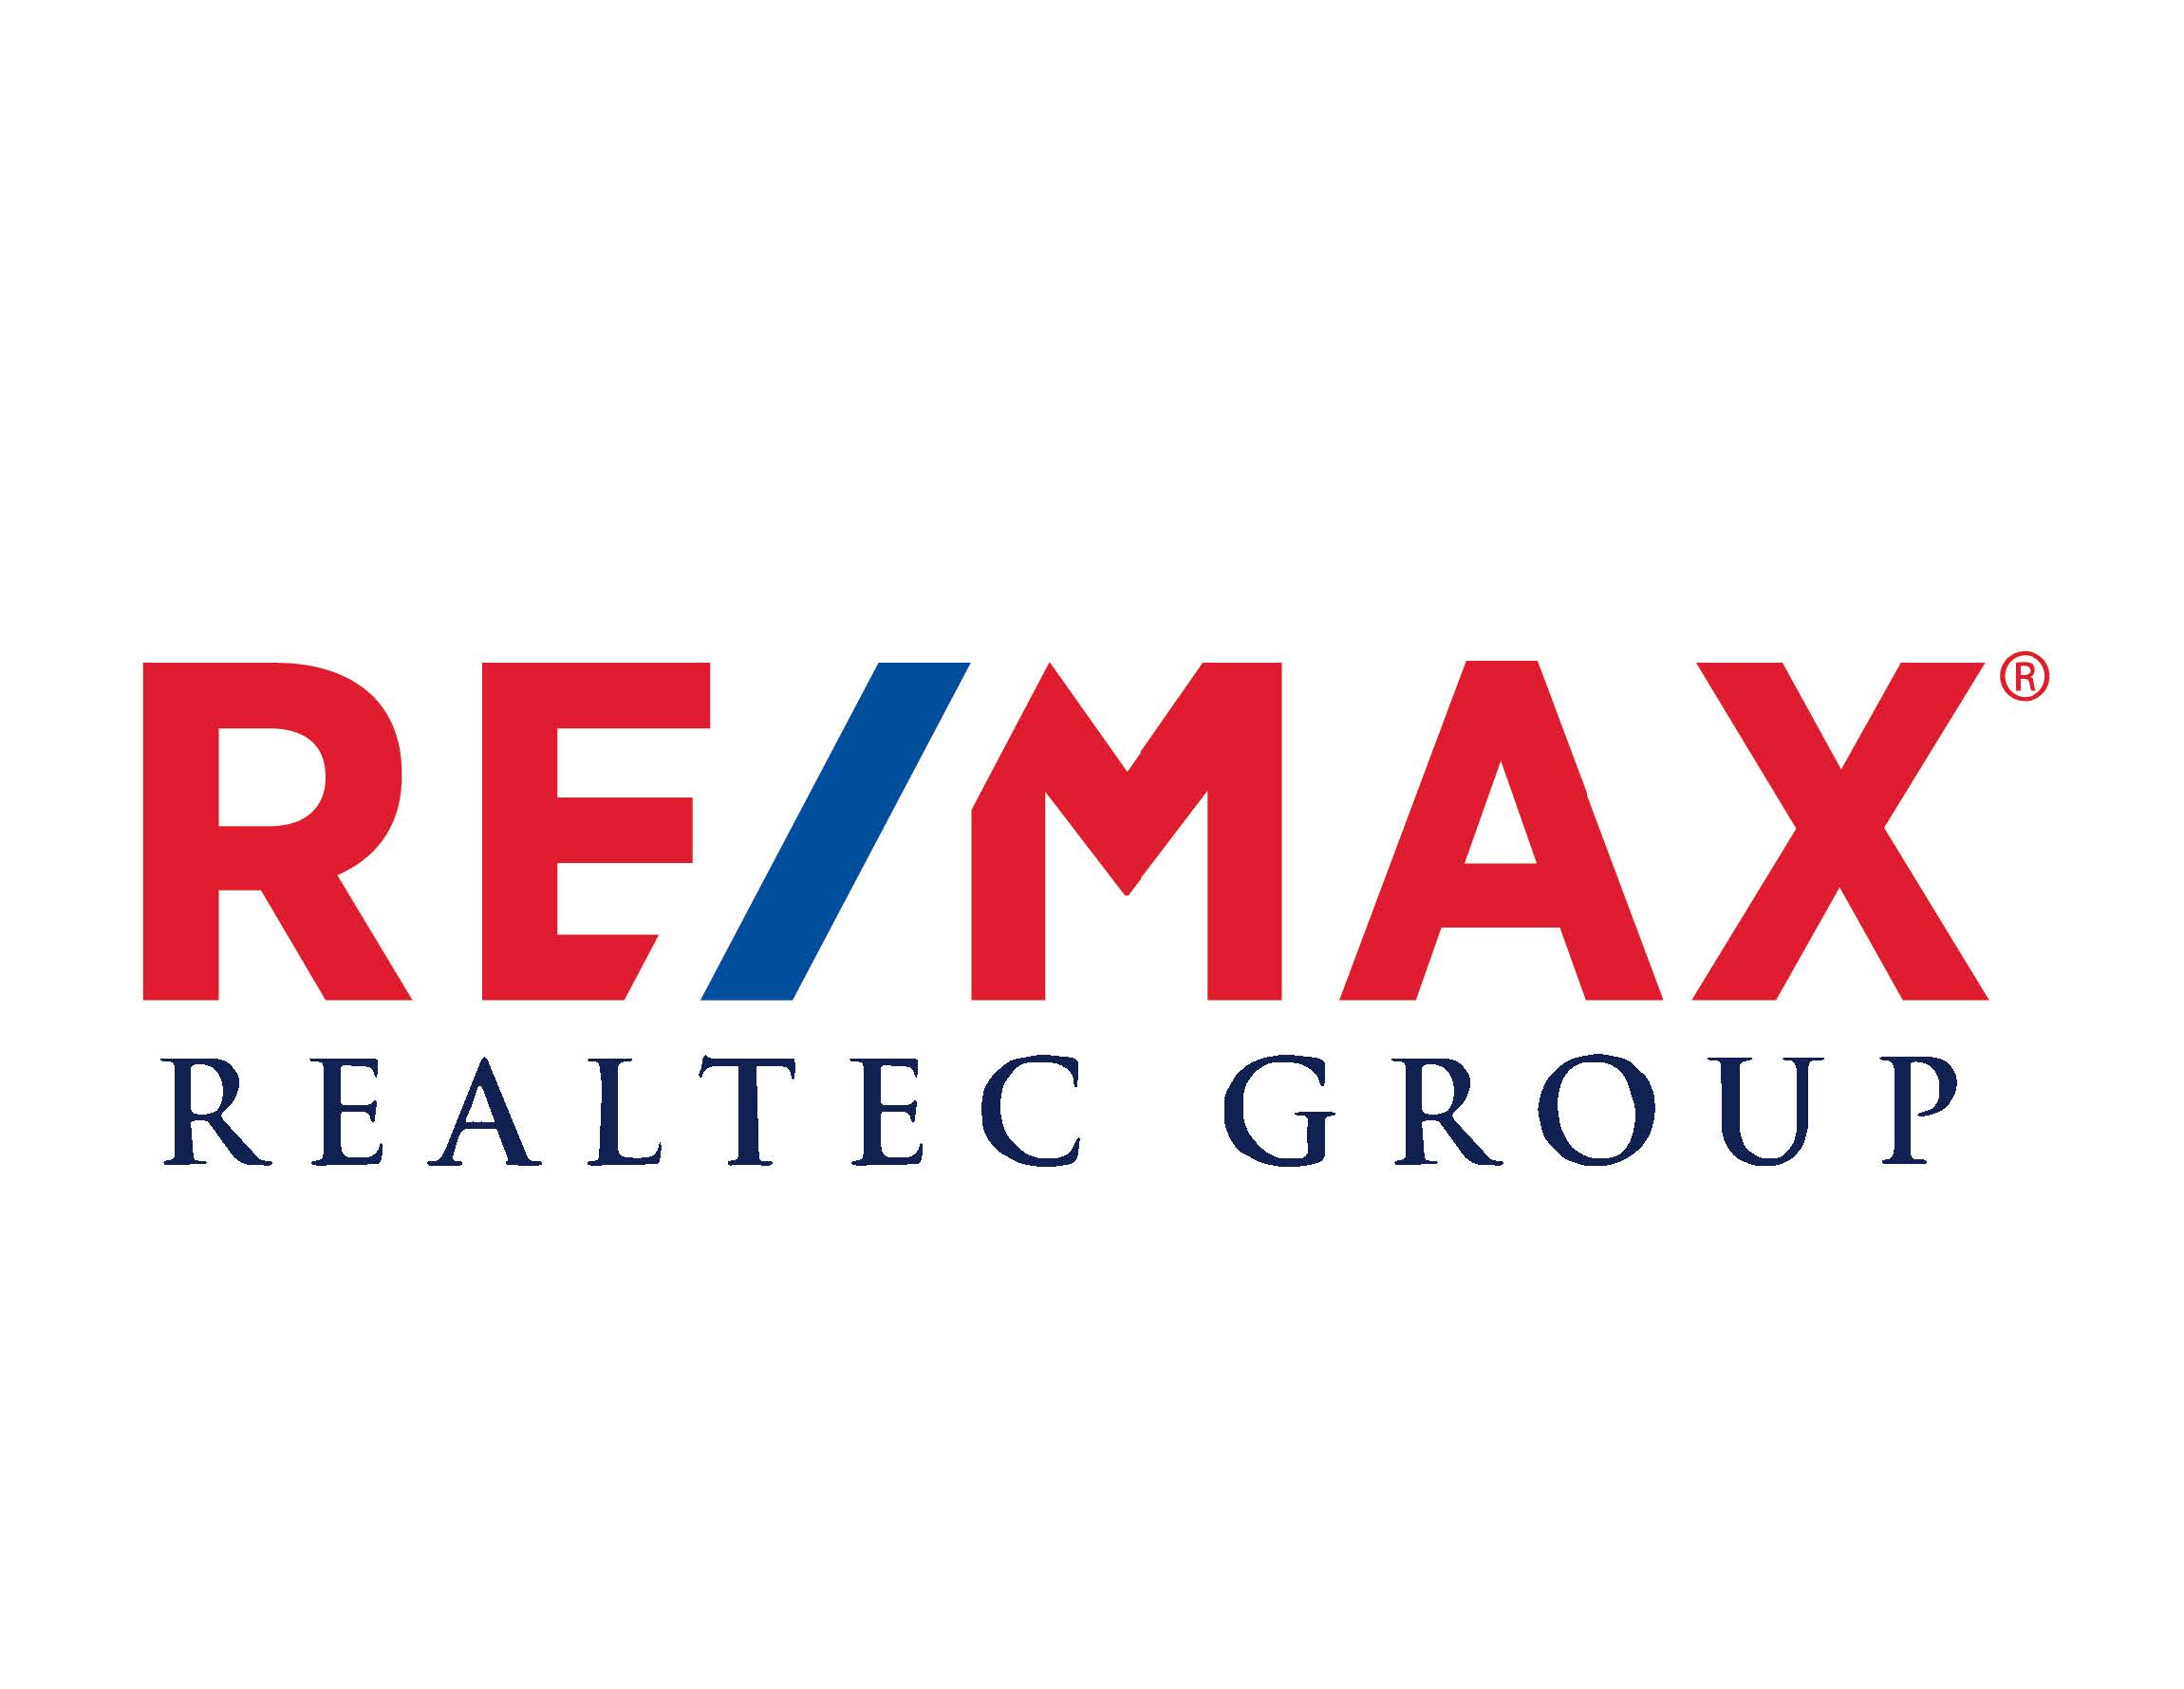 Remax realtec group